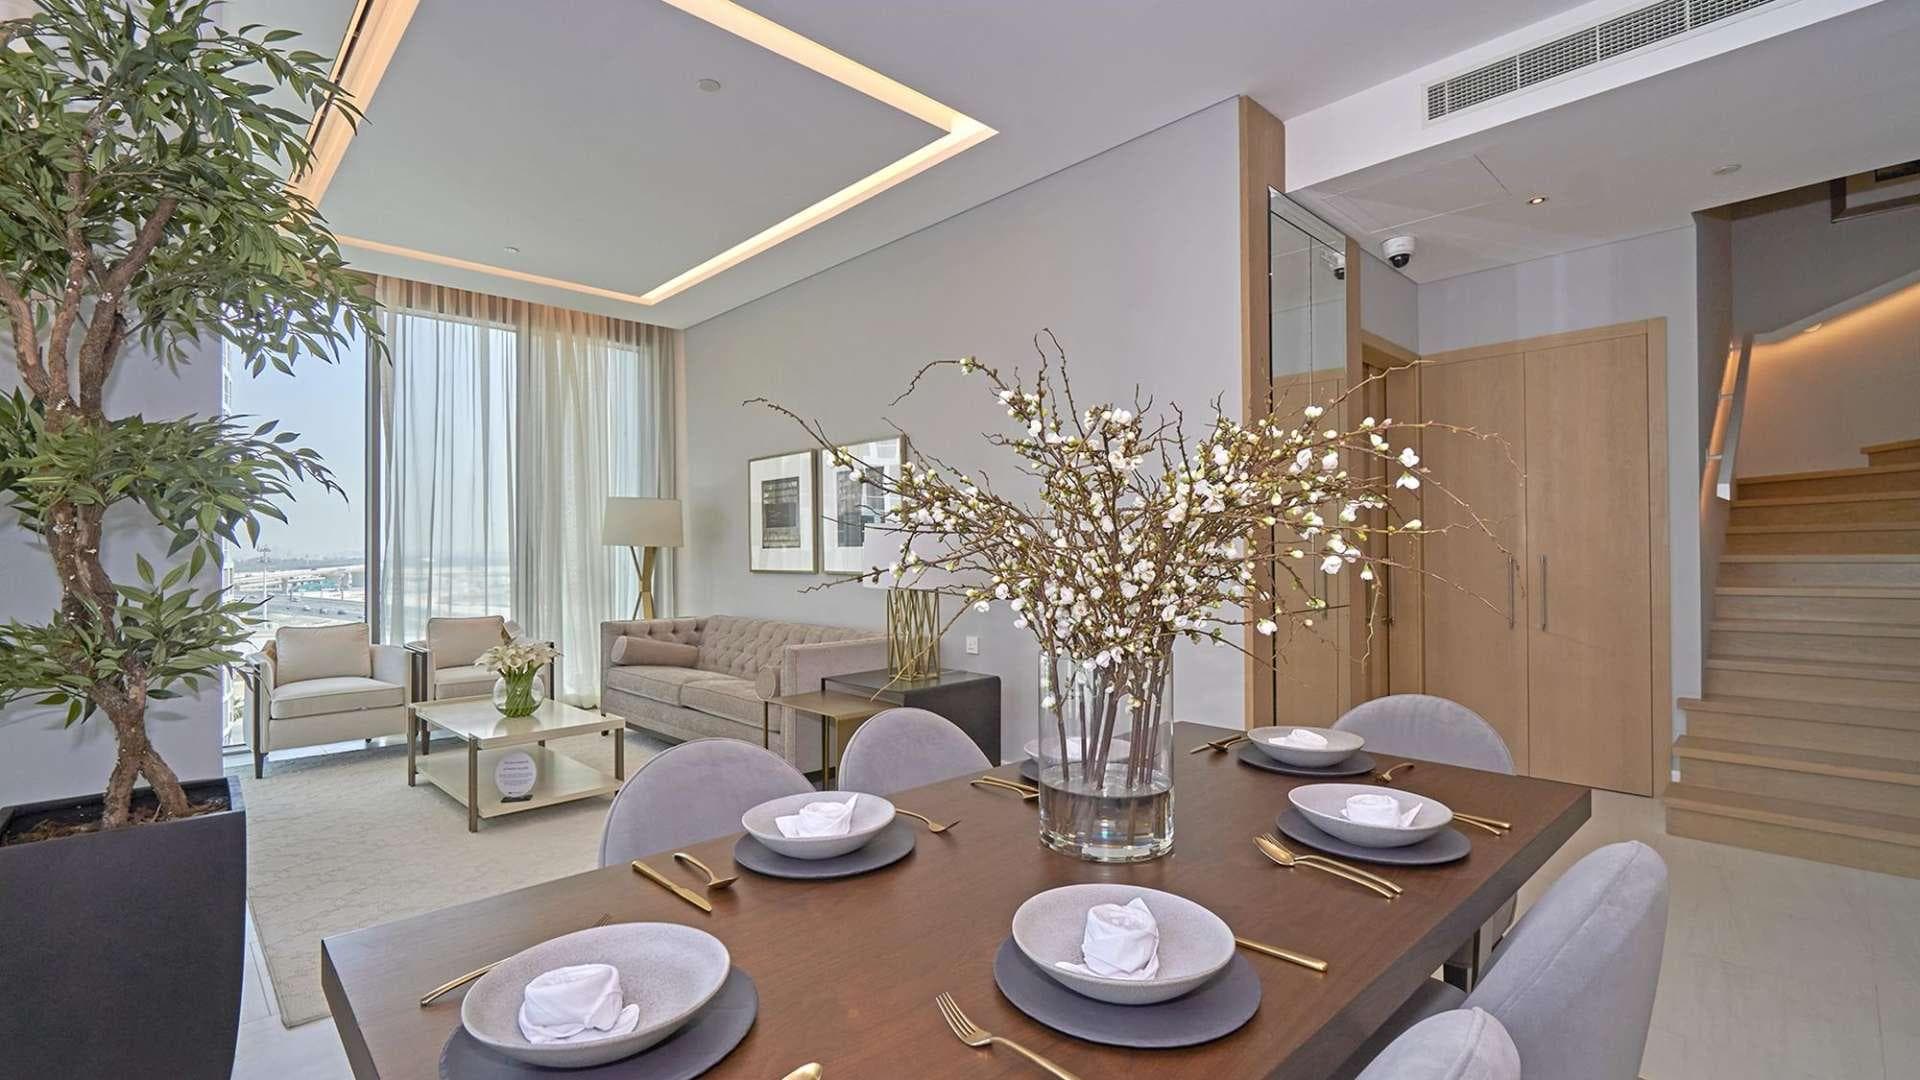 2 Bedroom Apartment For Rent Sls Dubai Hotel Residences Lp20720 287cf42369e7ca00.jpg